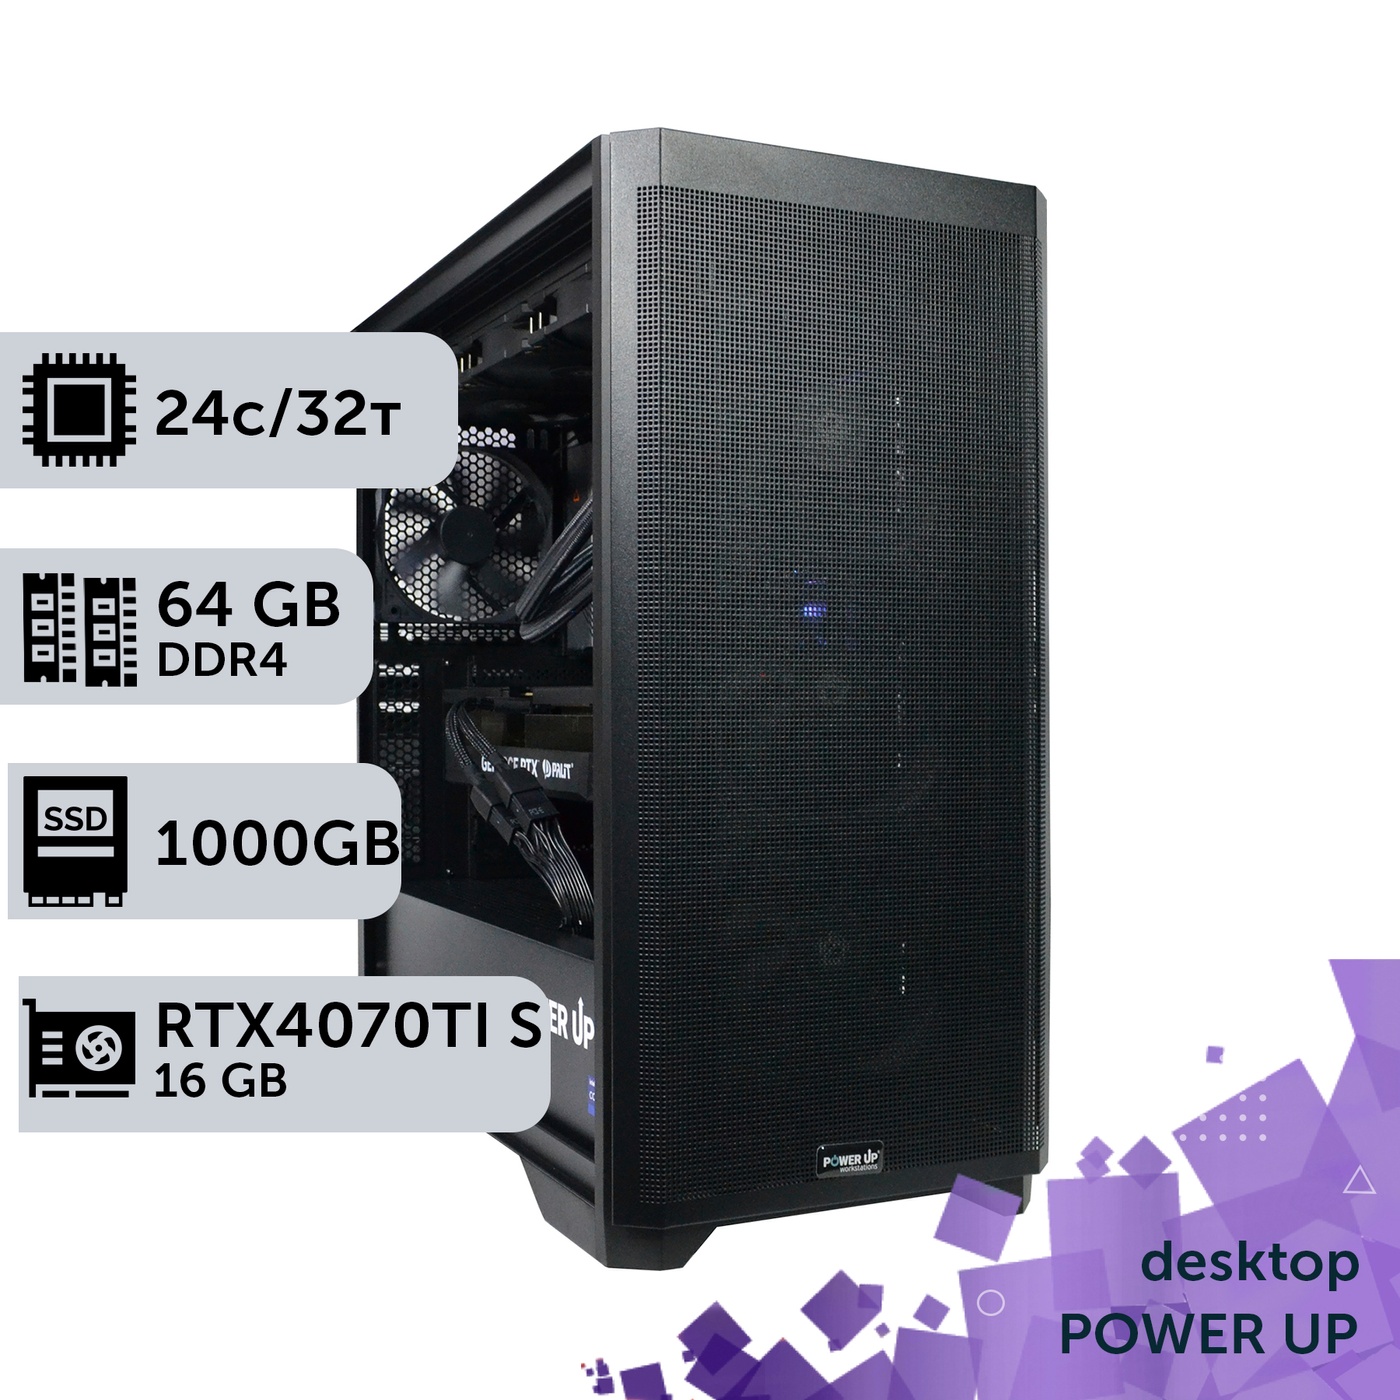 Рабочая станция PowerUp Desktop #388 Core i9 14900K/64 GB/SSD 1TB/GeForce RTX 4070Ti Super 16GB